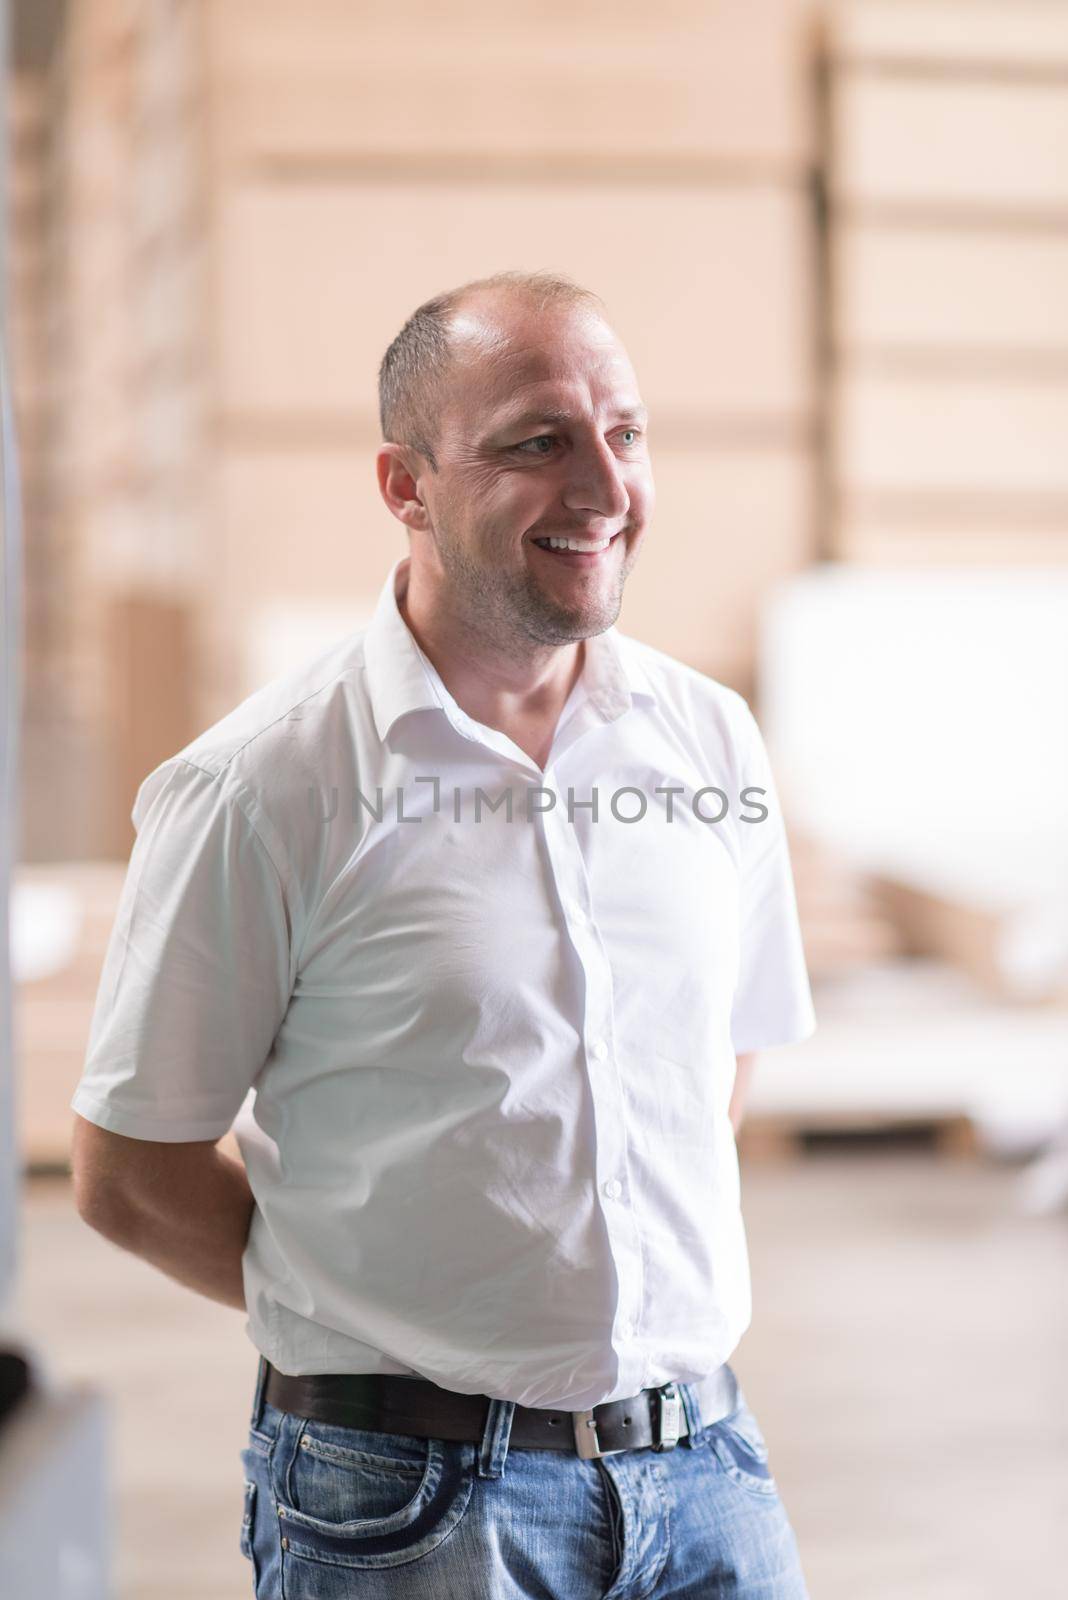 designer in his furniture manufacturing workshop by dotshock